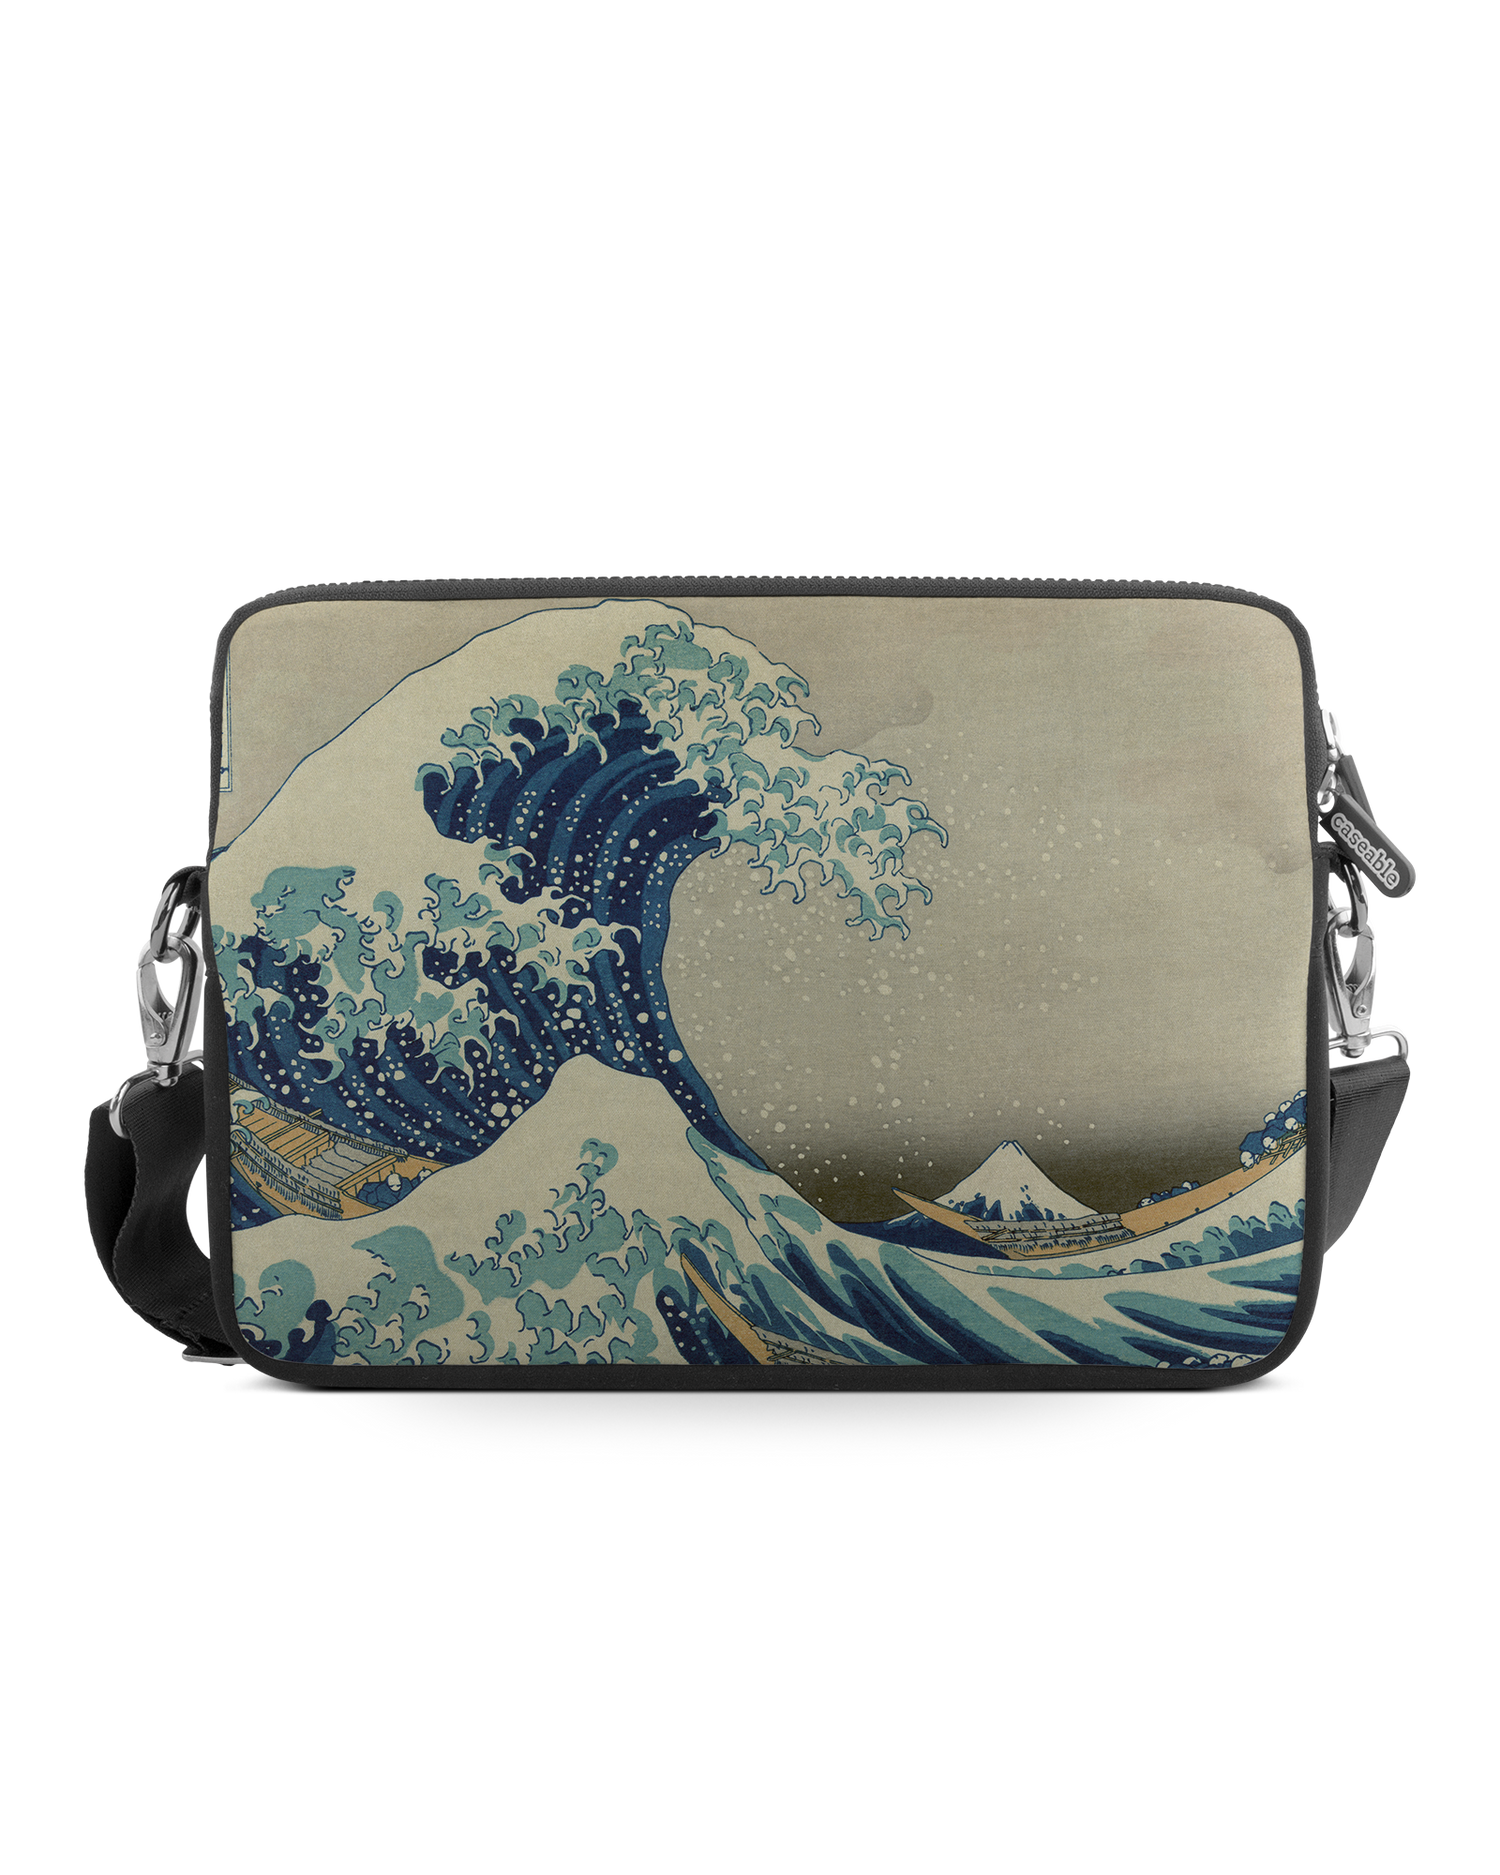 Great Wave Off Kanagawa By Hokusai Premium Laptop Bag 13 inch: Front View